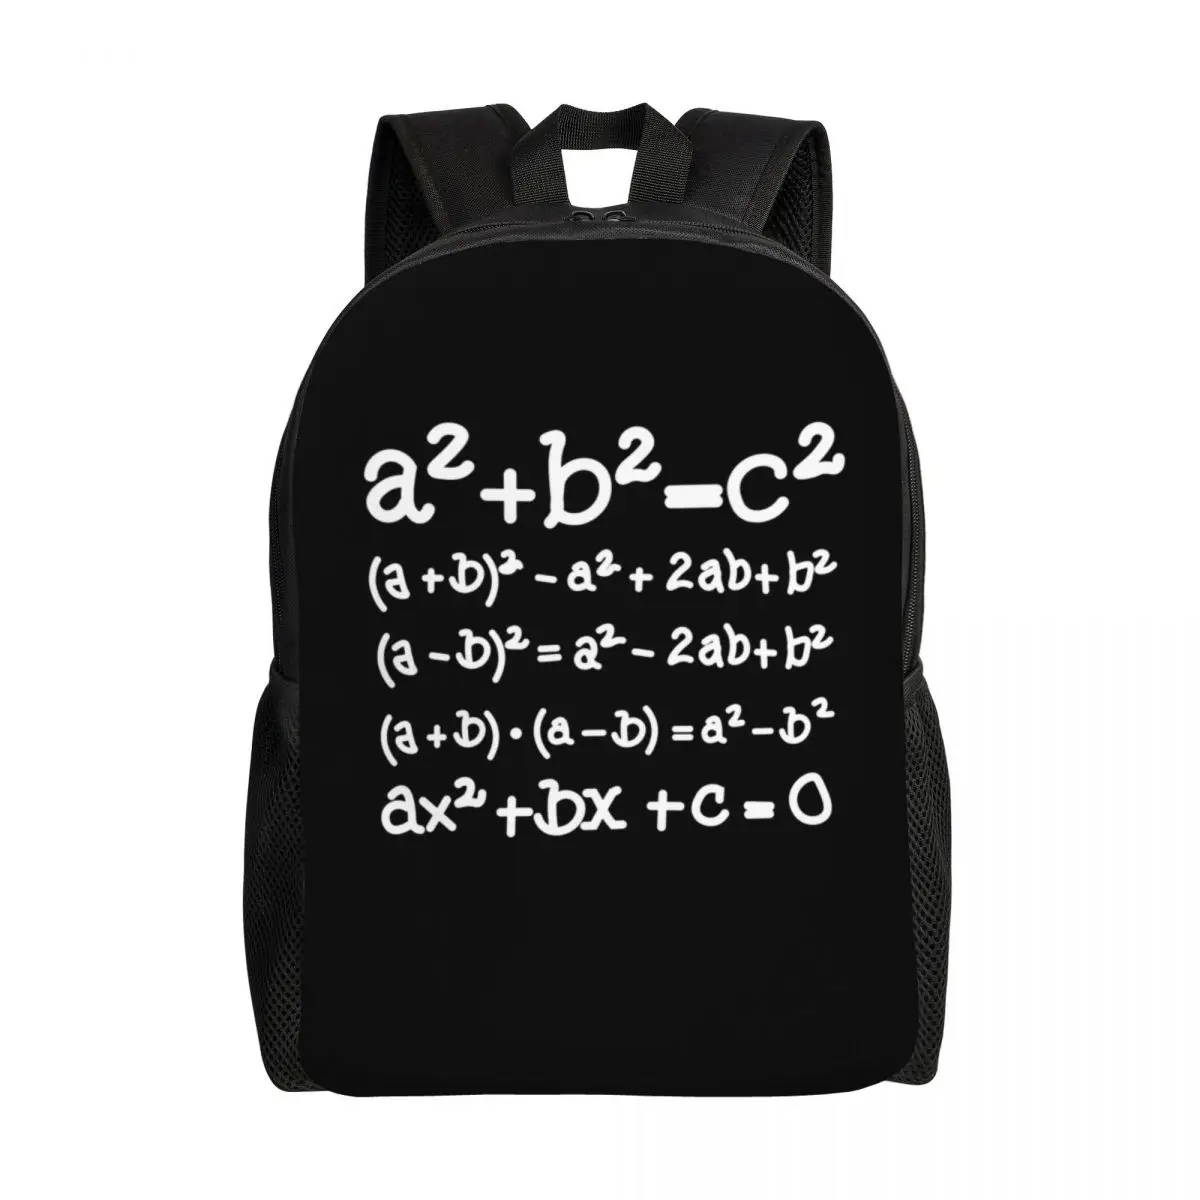 

Math Formula Backpack for Women Men School College Students Bookbag Fits 15 Inch Laptop Mathematics Science Teacher Bags